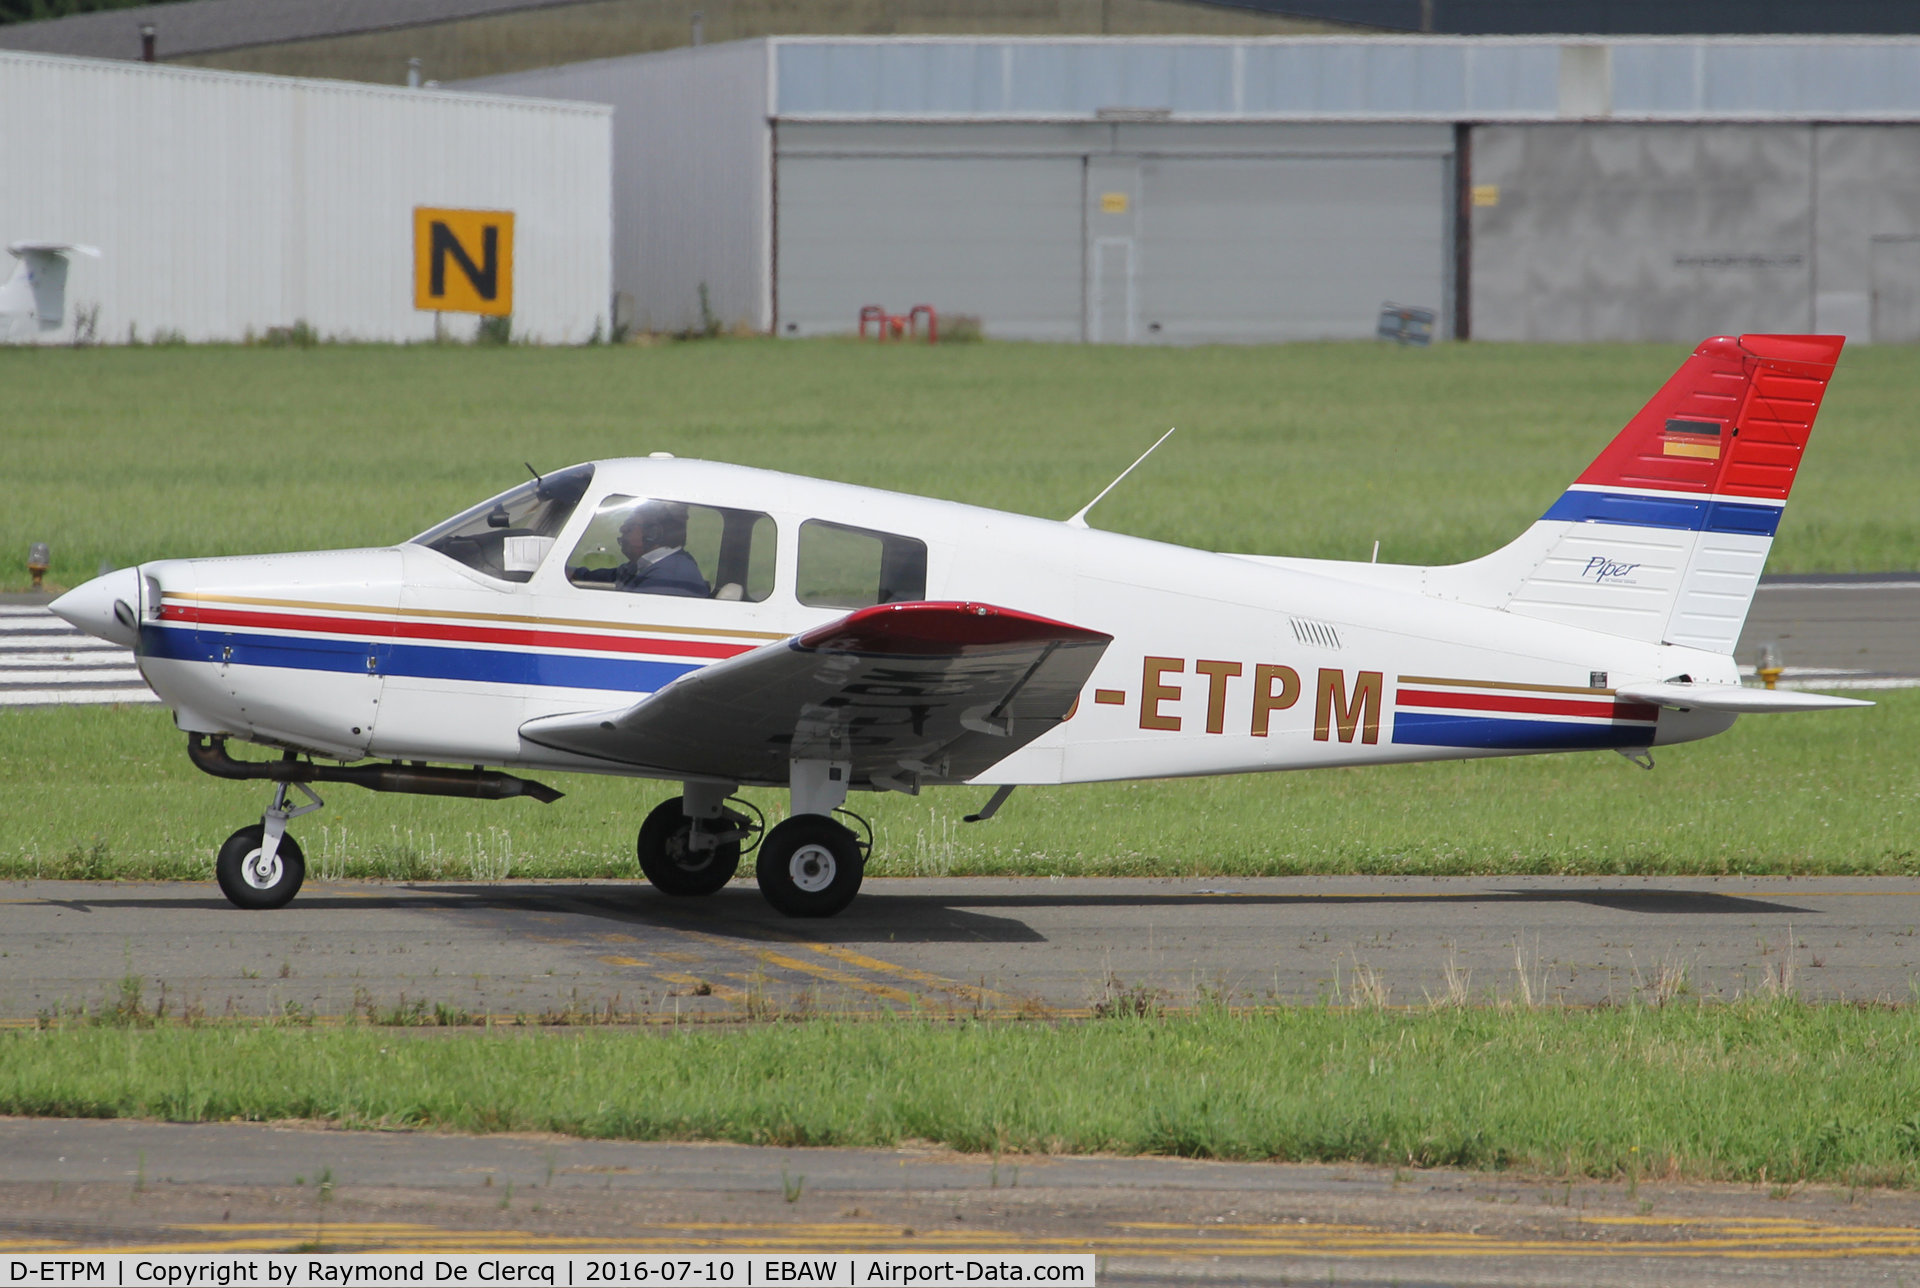 D-ETPM, 1994 Piper PA-28-161 Cadet C/N 2841363, At Antwerp Airport.